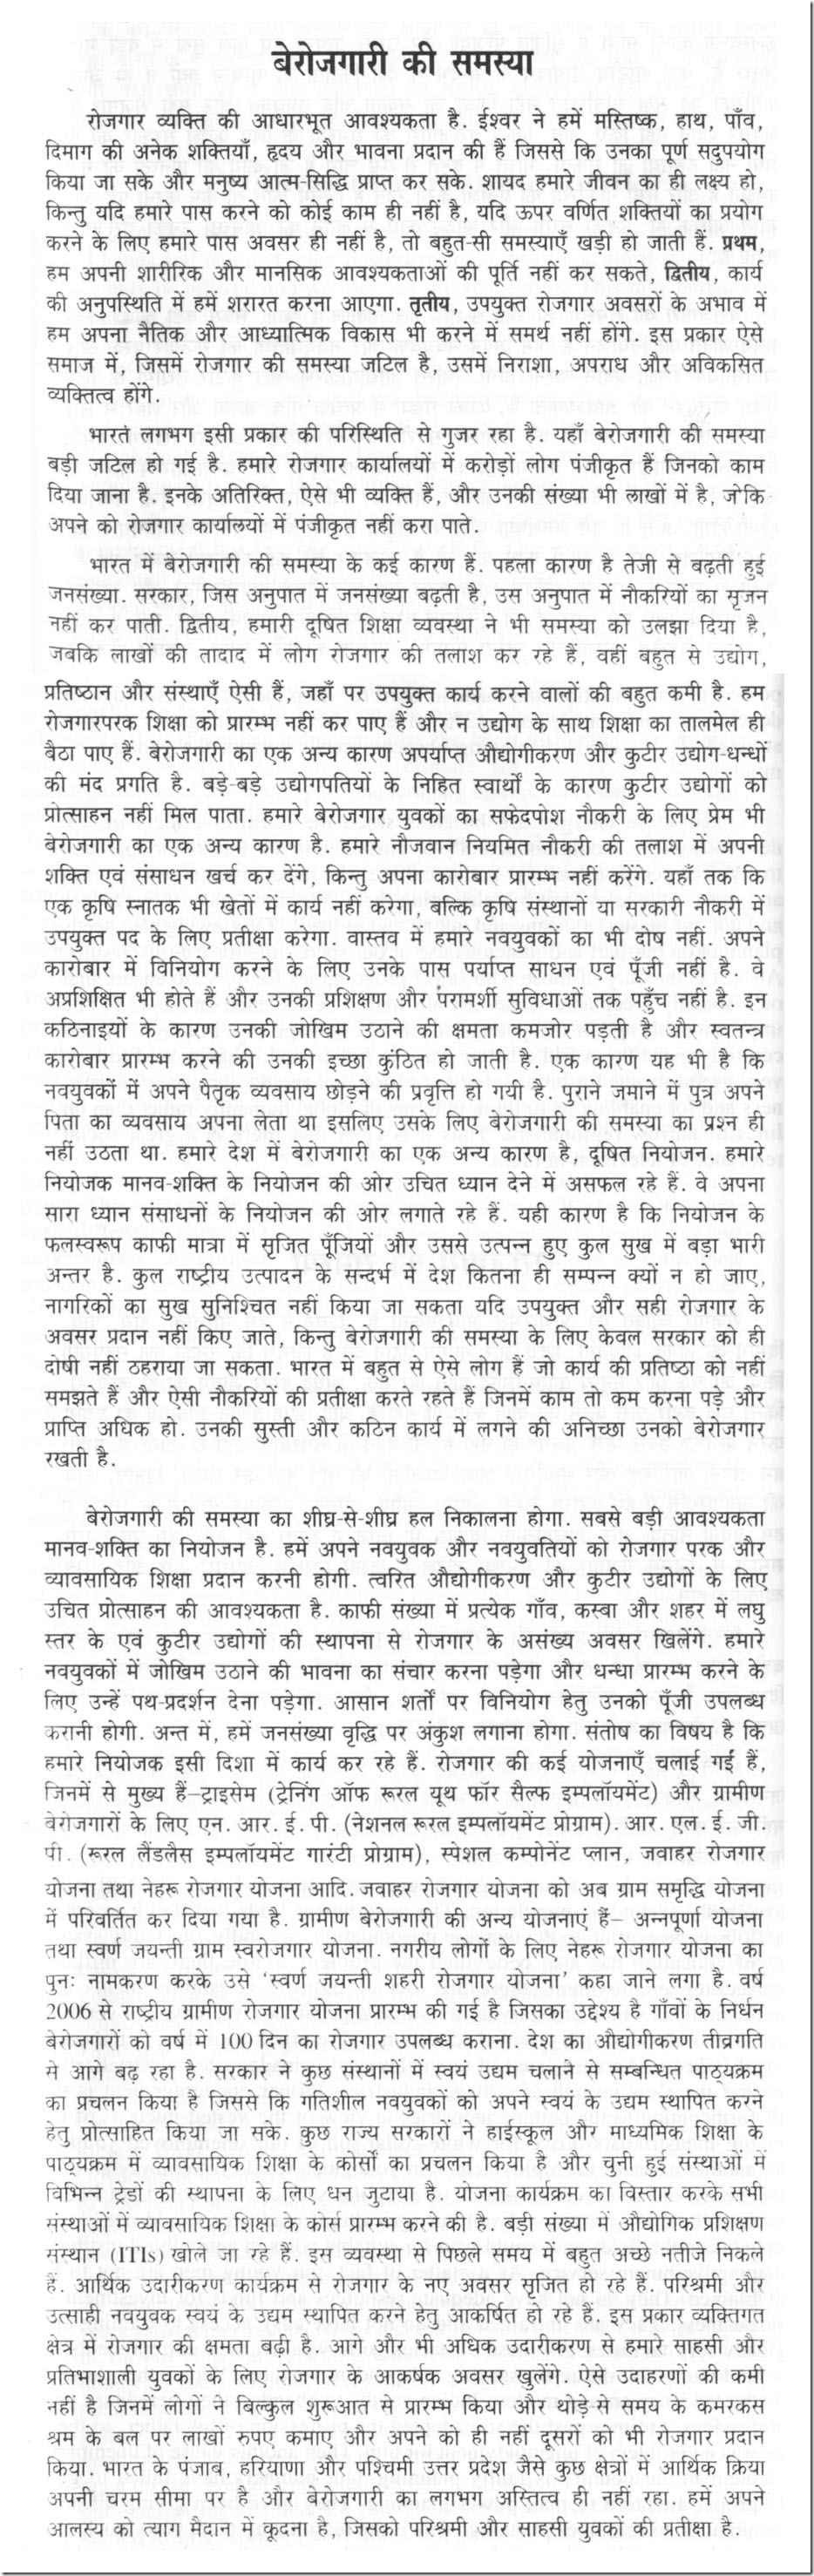 Essay on corruption in politics in hindi